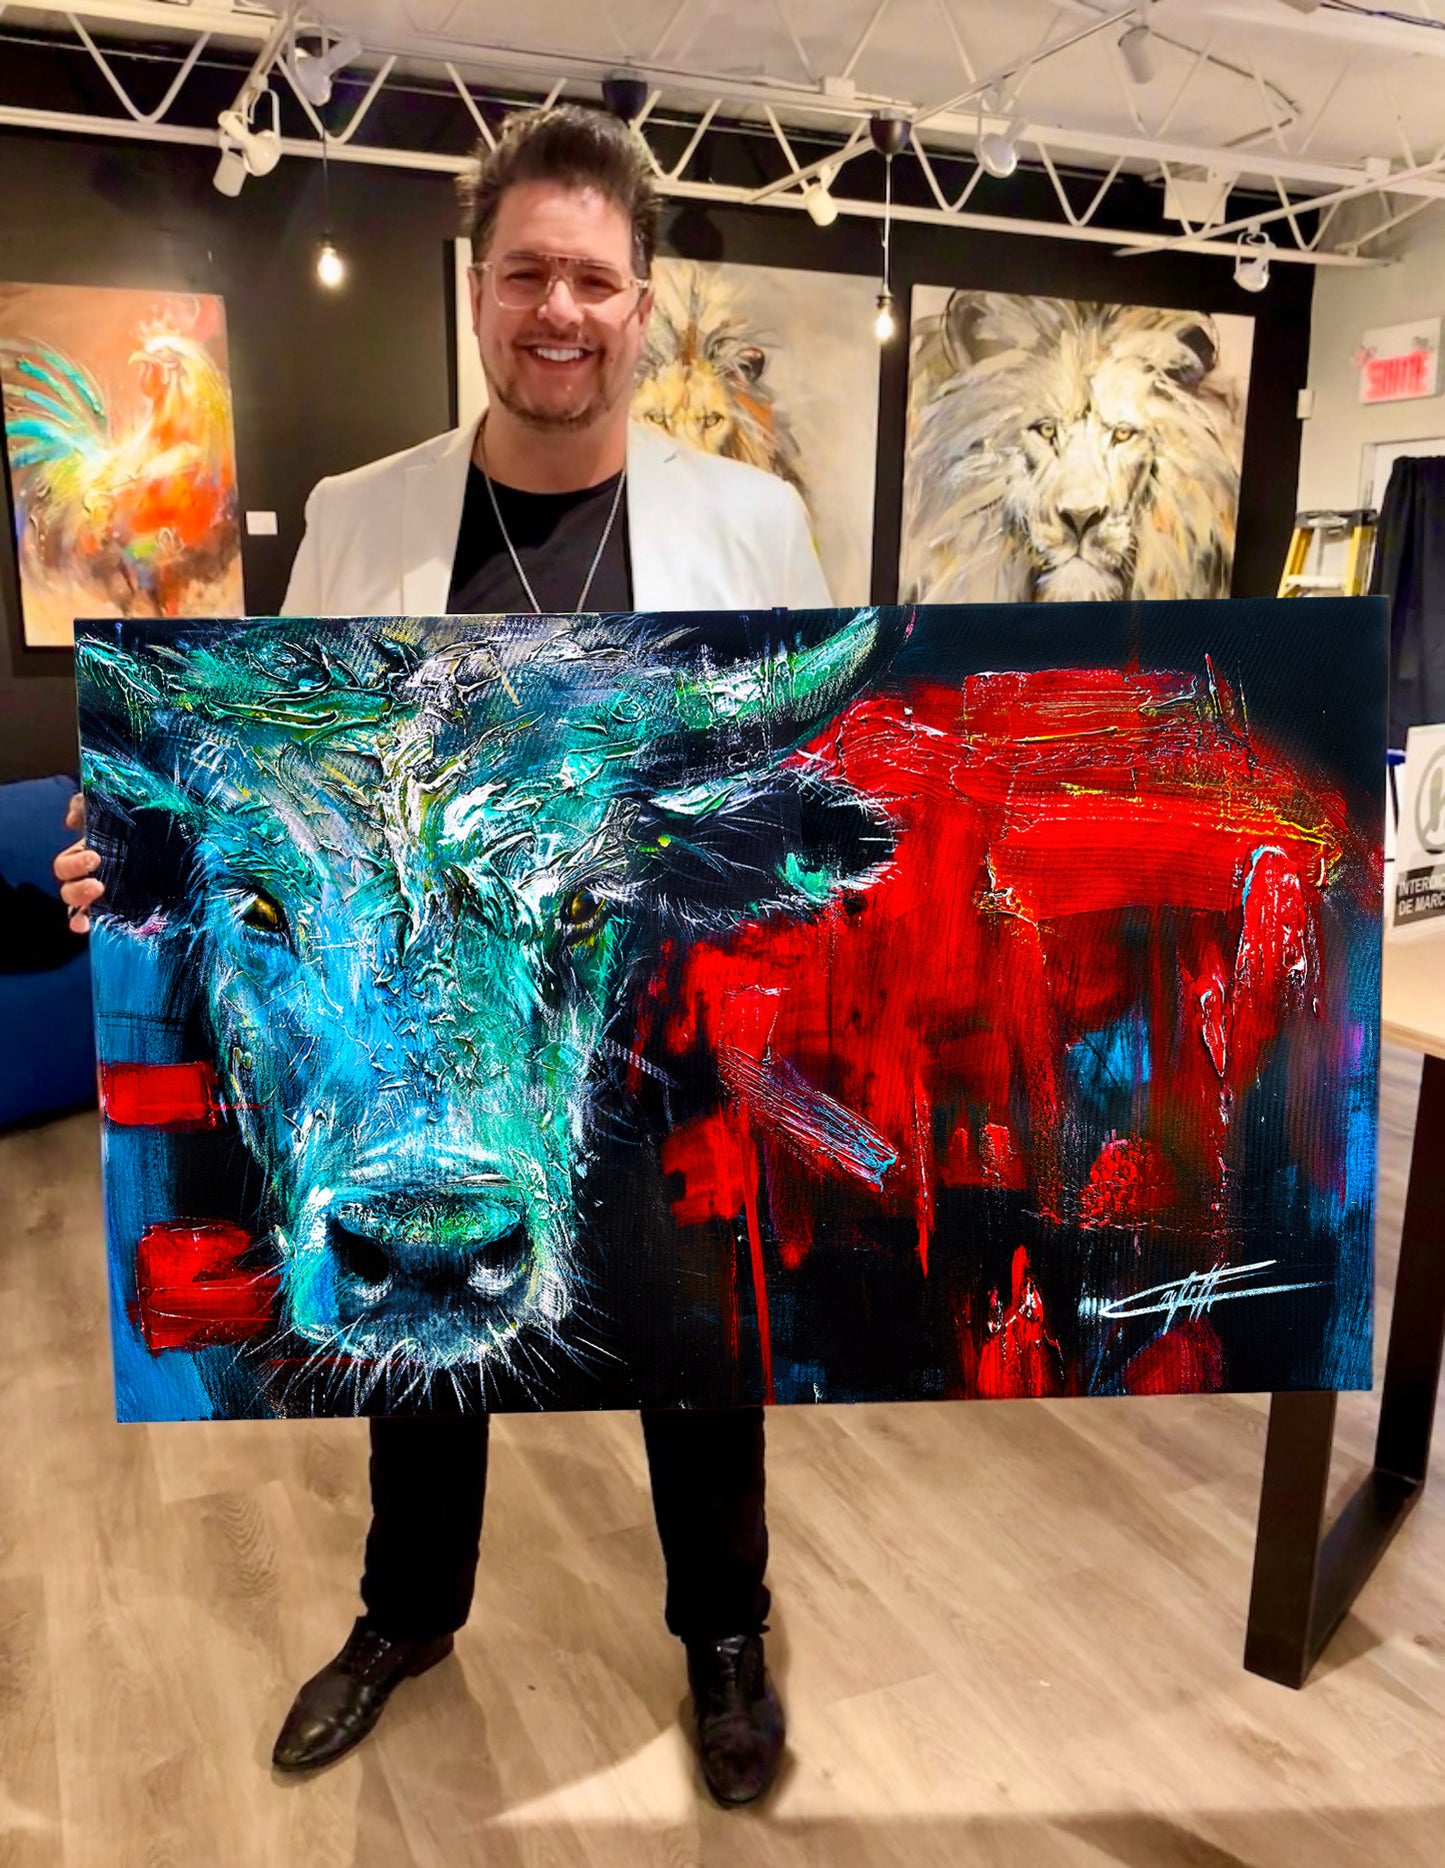 Confetti Artist: bullfighting shine, original painting/ texturized passionnate painting of an intense coloful bull